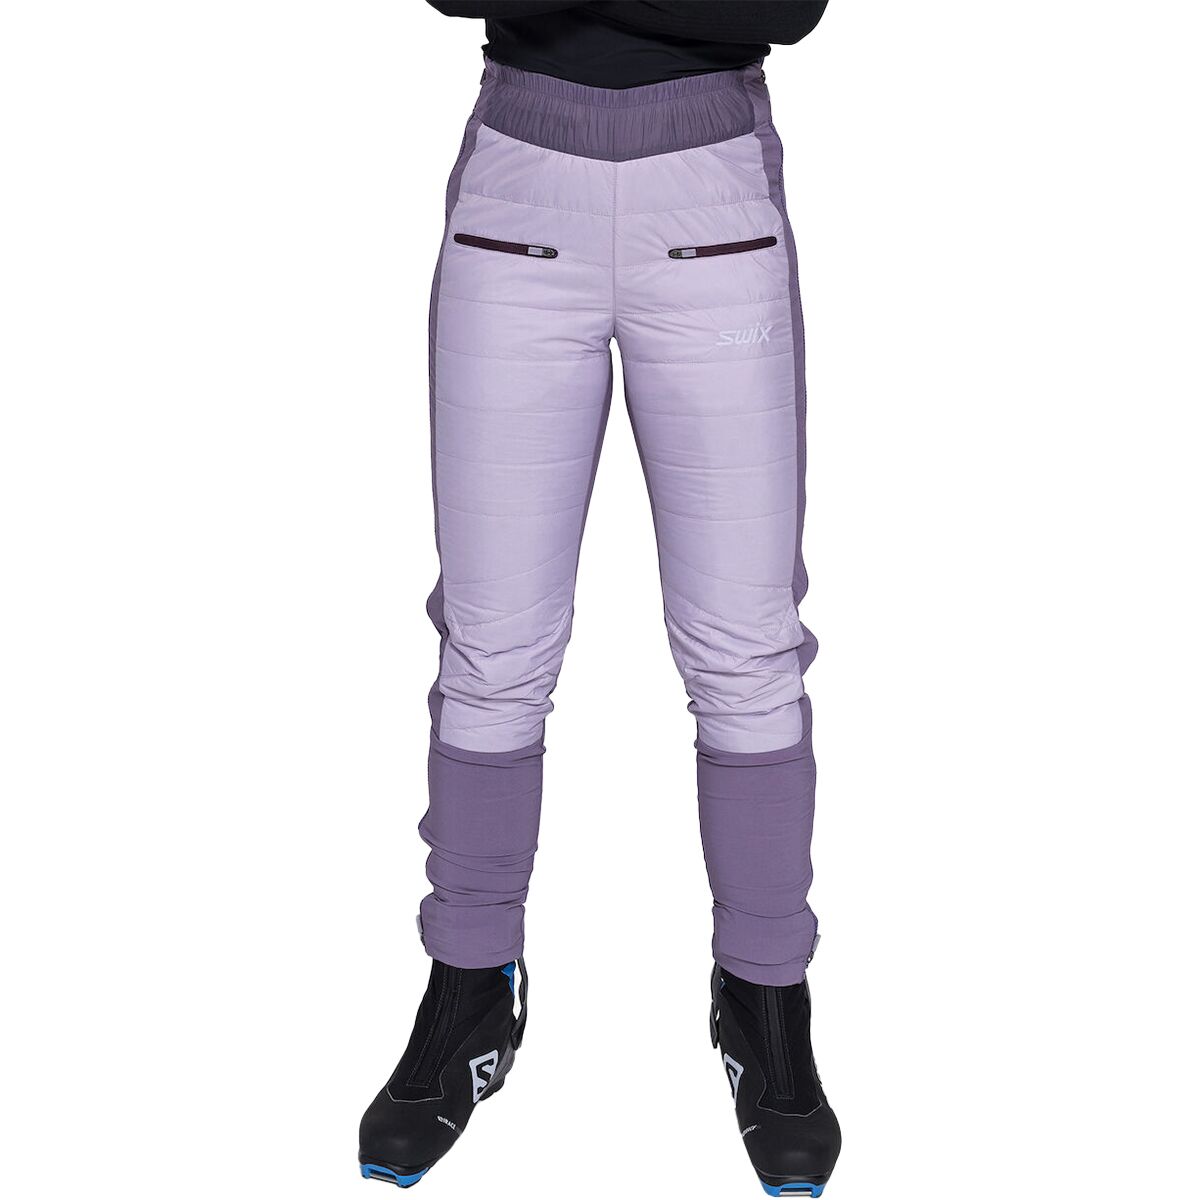 Swix Horizon Pant - Women's Light Purple/Dusty Purple